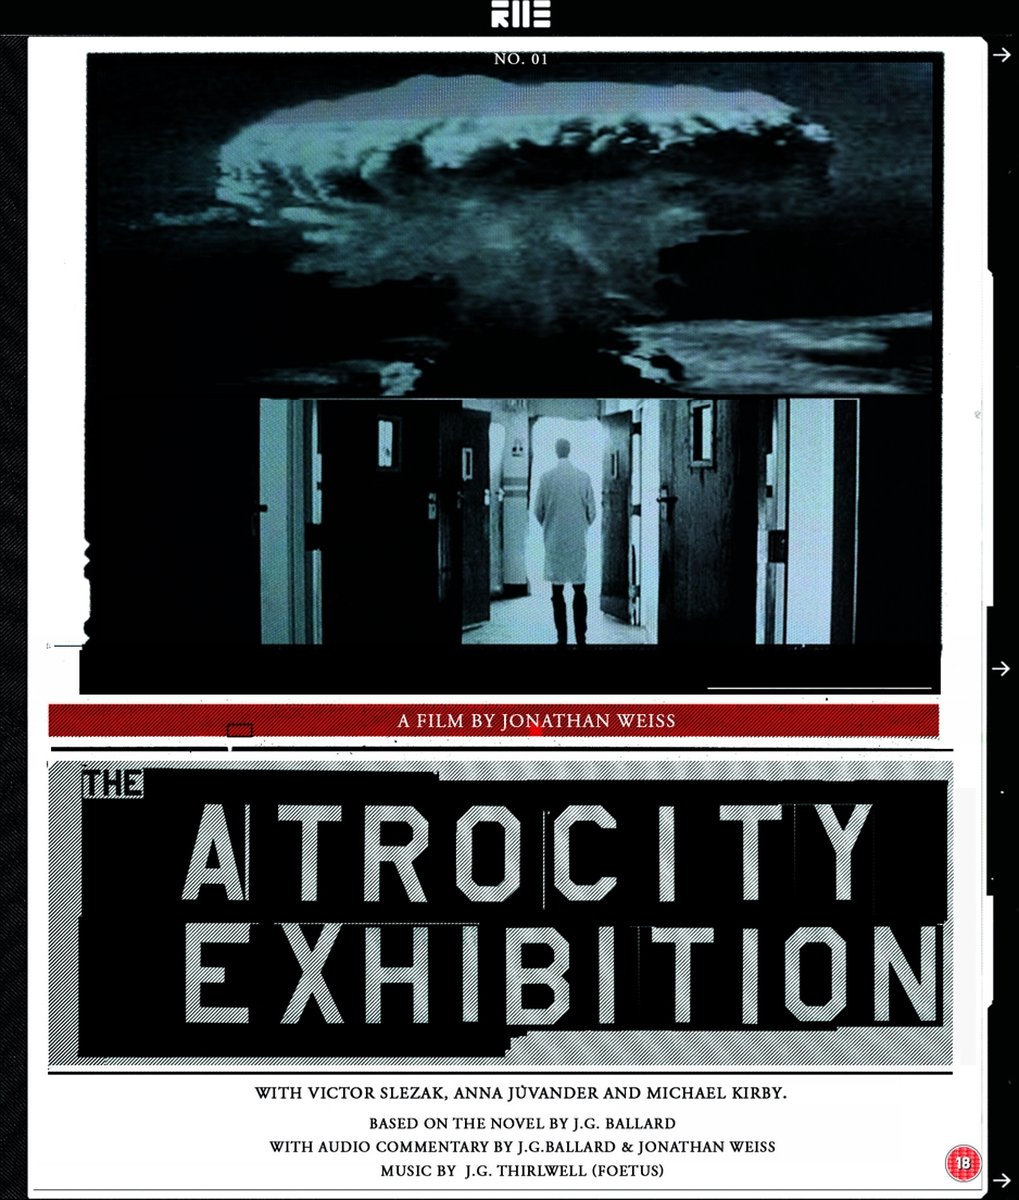 The Atrocity Exhibition (Blu-ray), Jonathan Weiss